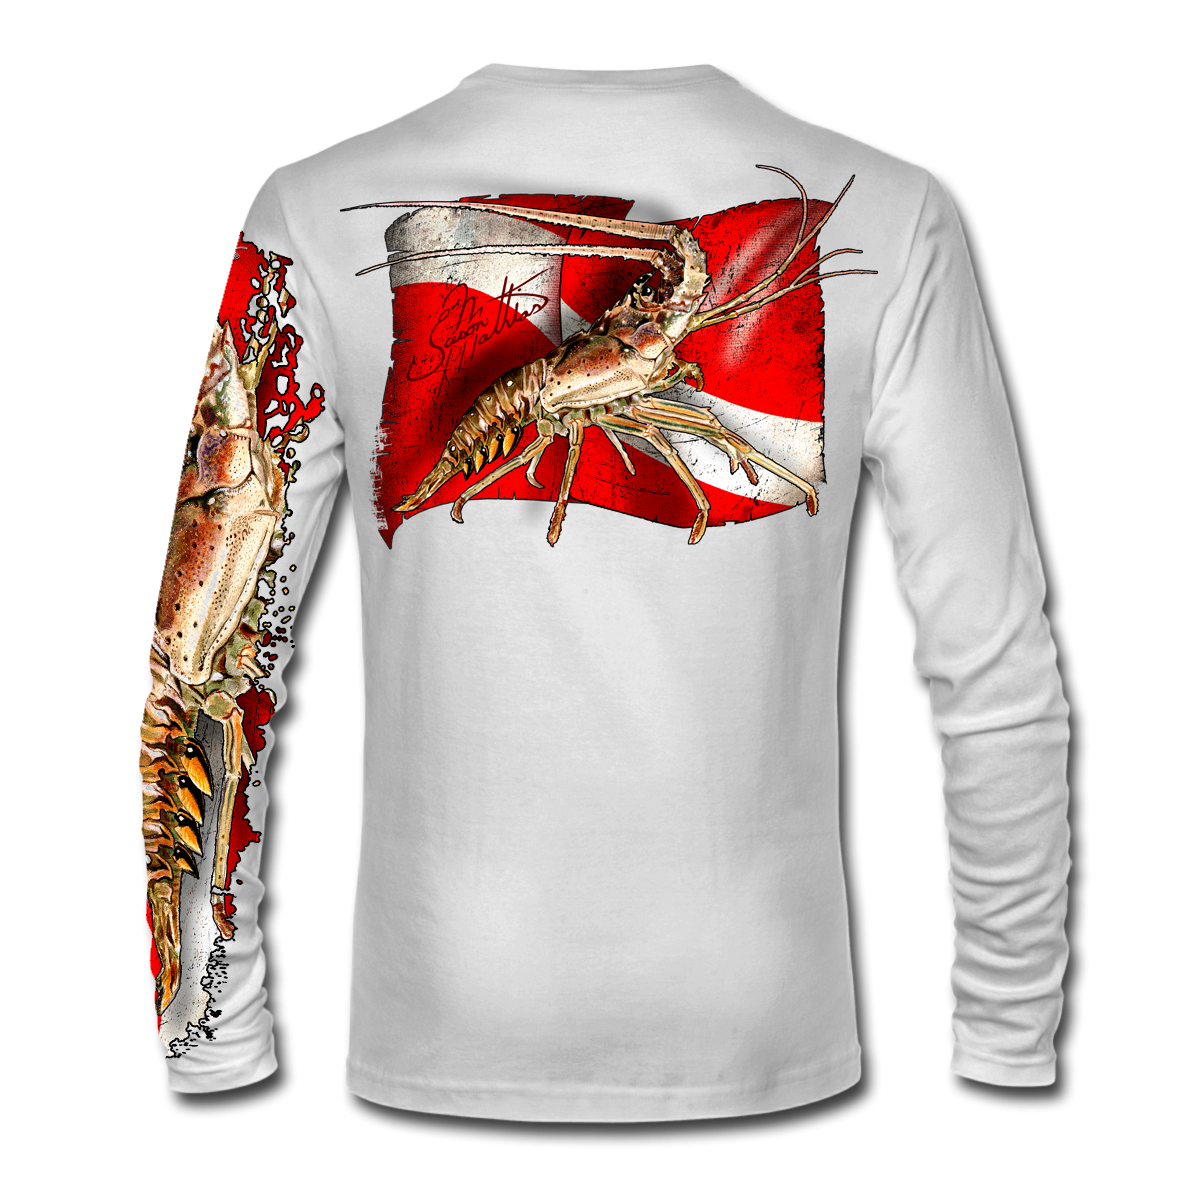 jason-mathias-shirt-line-back-white-lobster-shirt.png